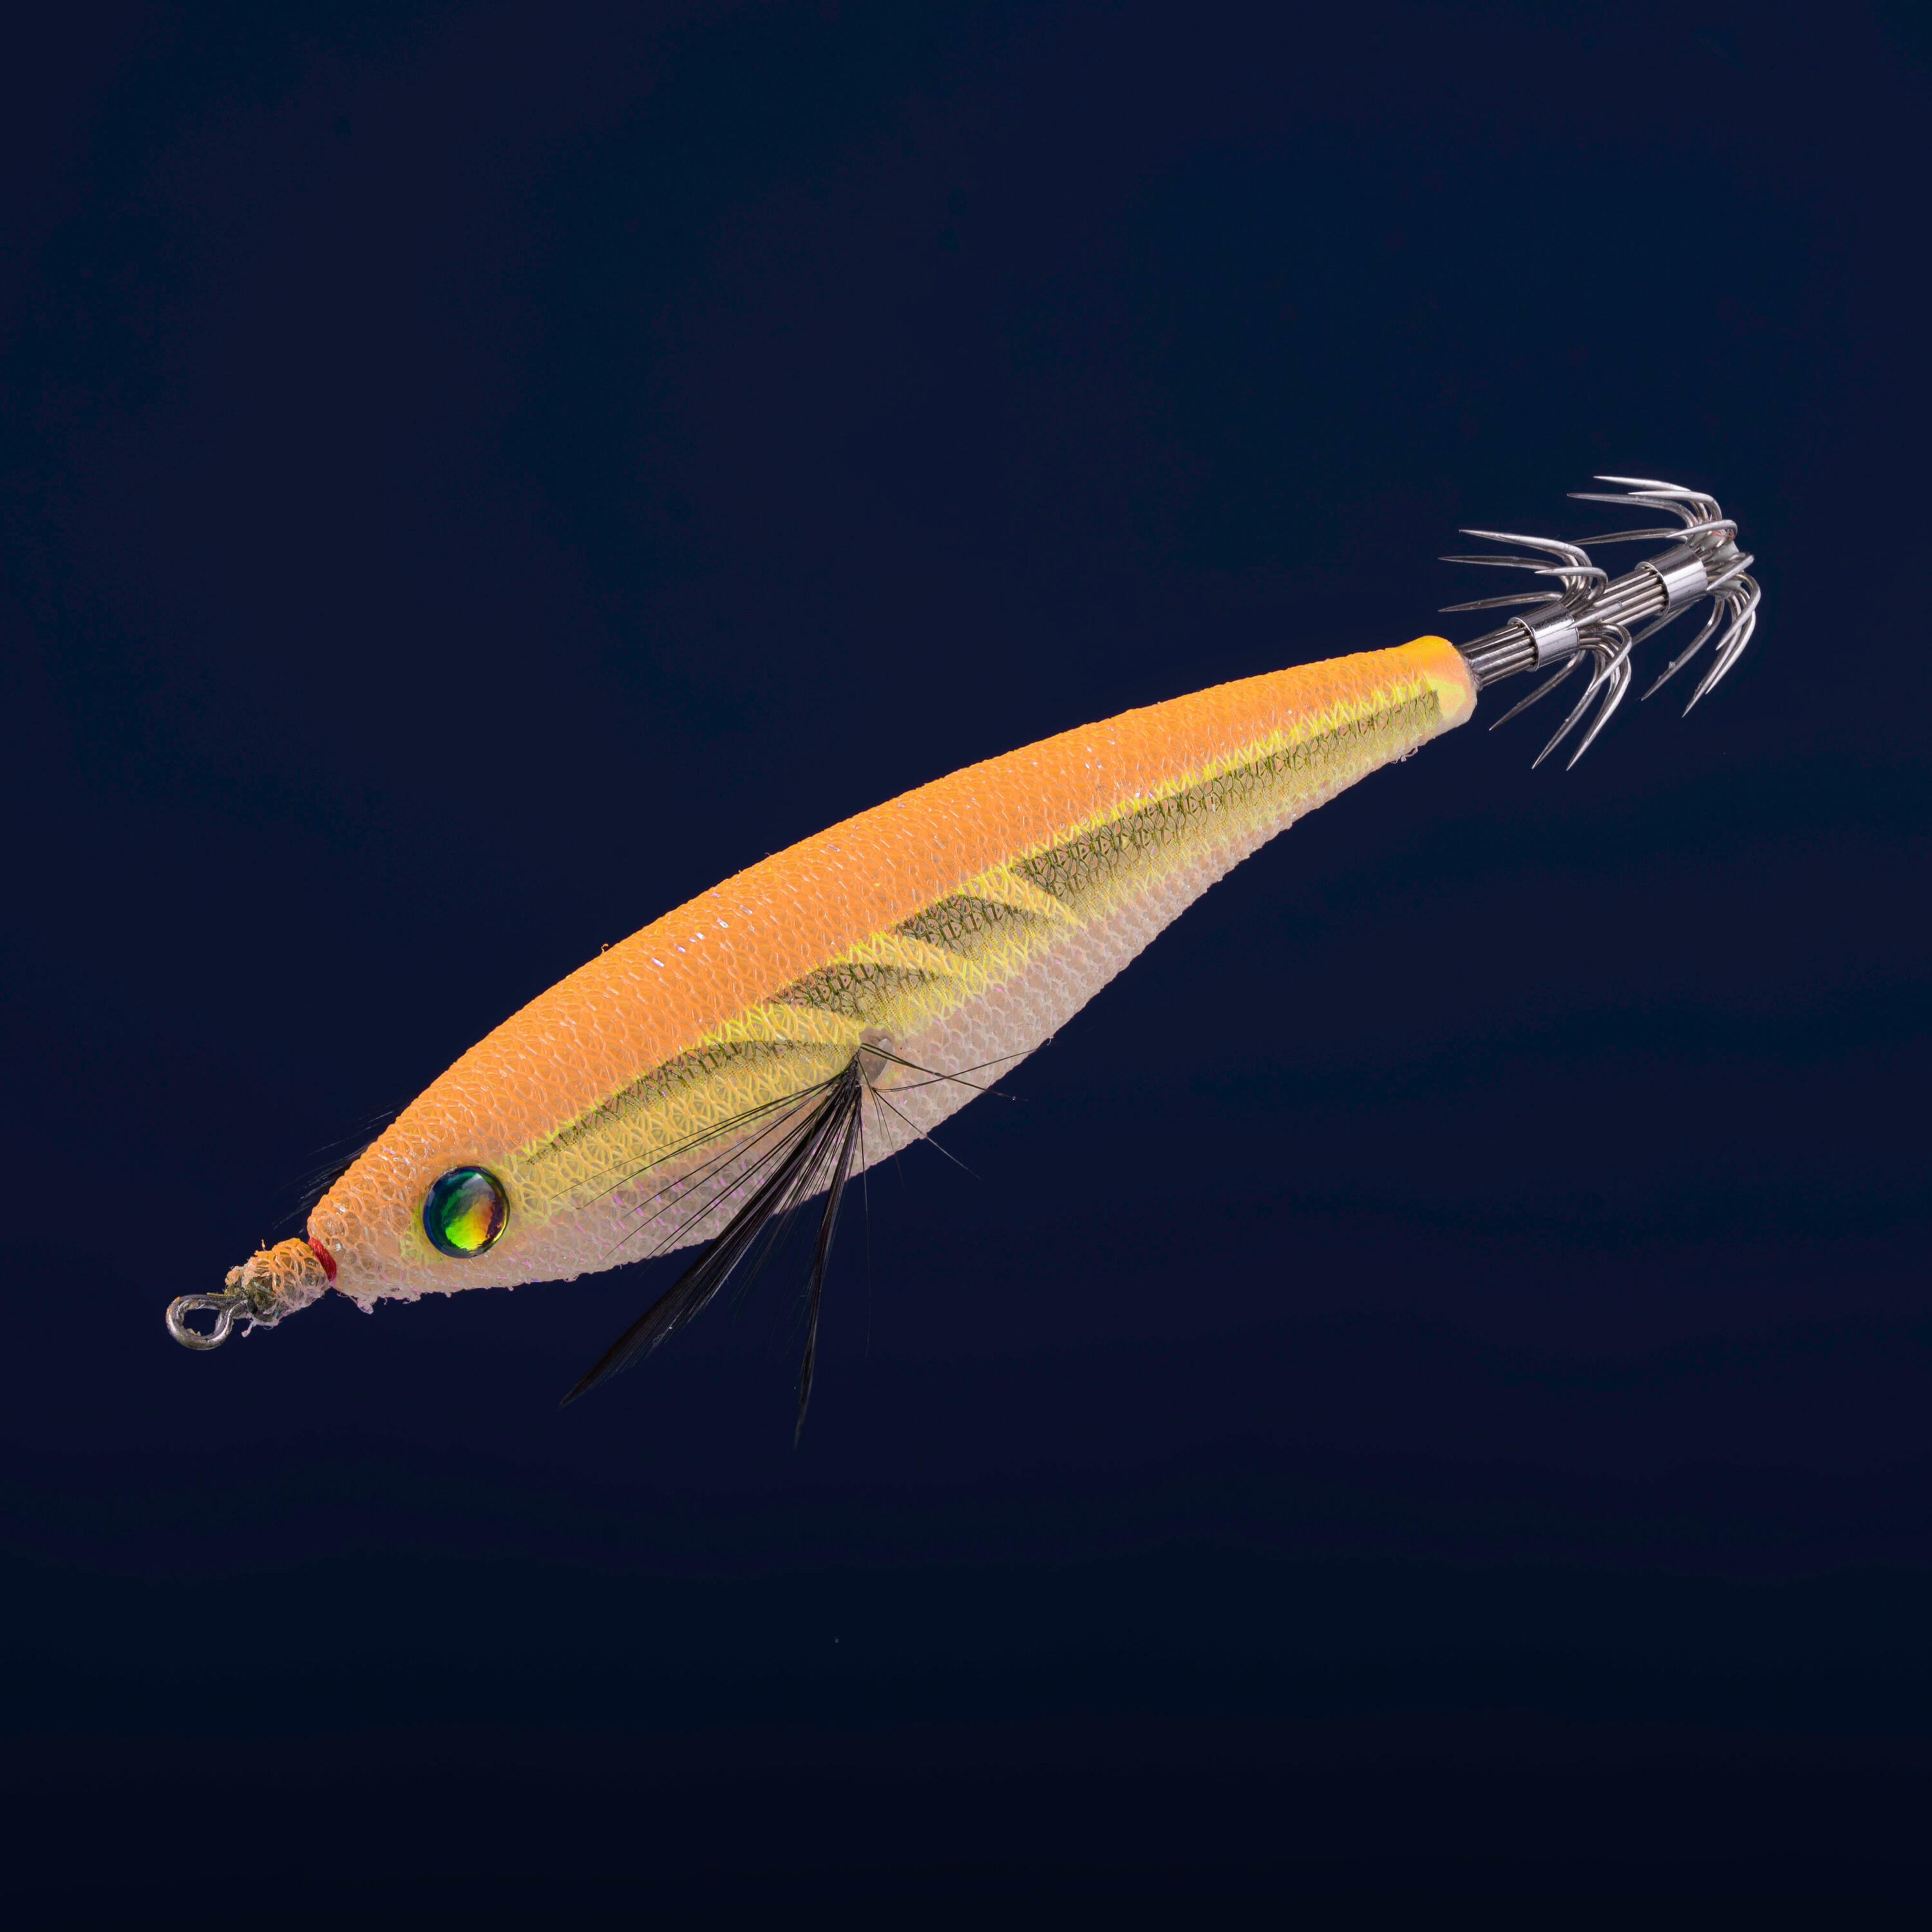 Floating jig for cuttlefish/squid fishing EBIFLO 2.5/110 - Neon orange 2/4